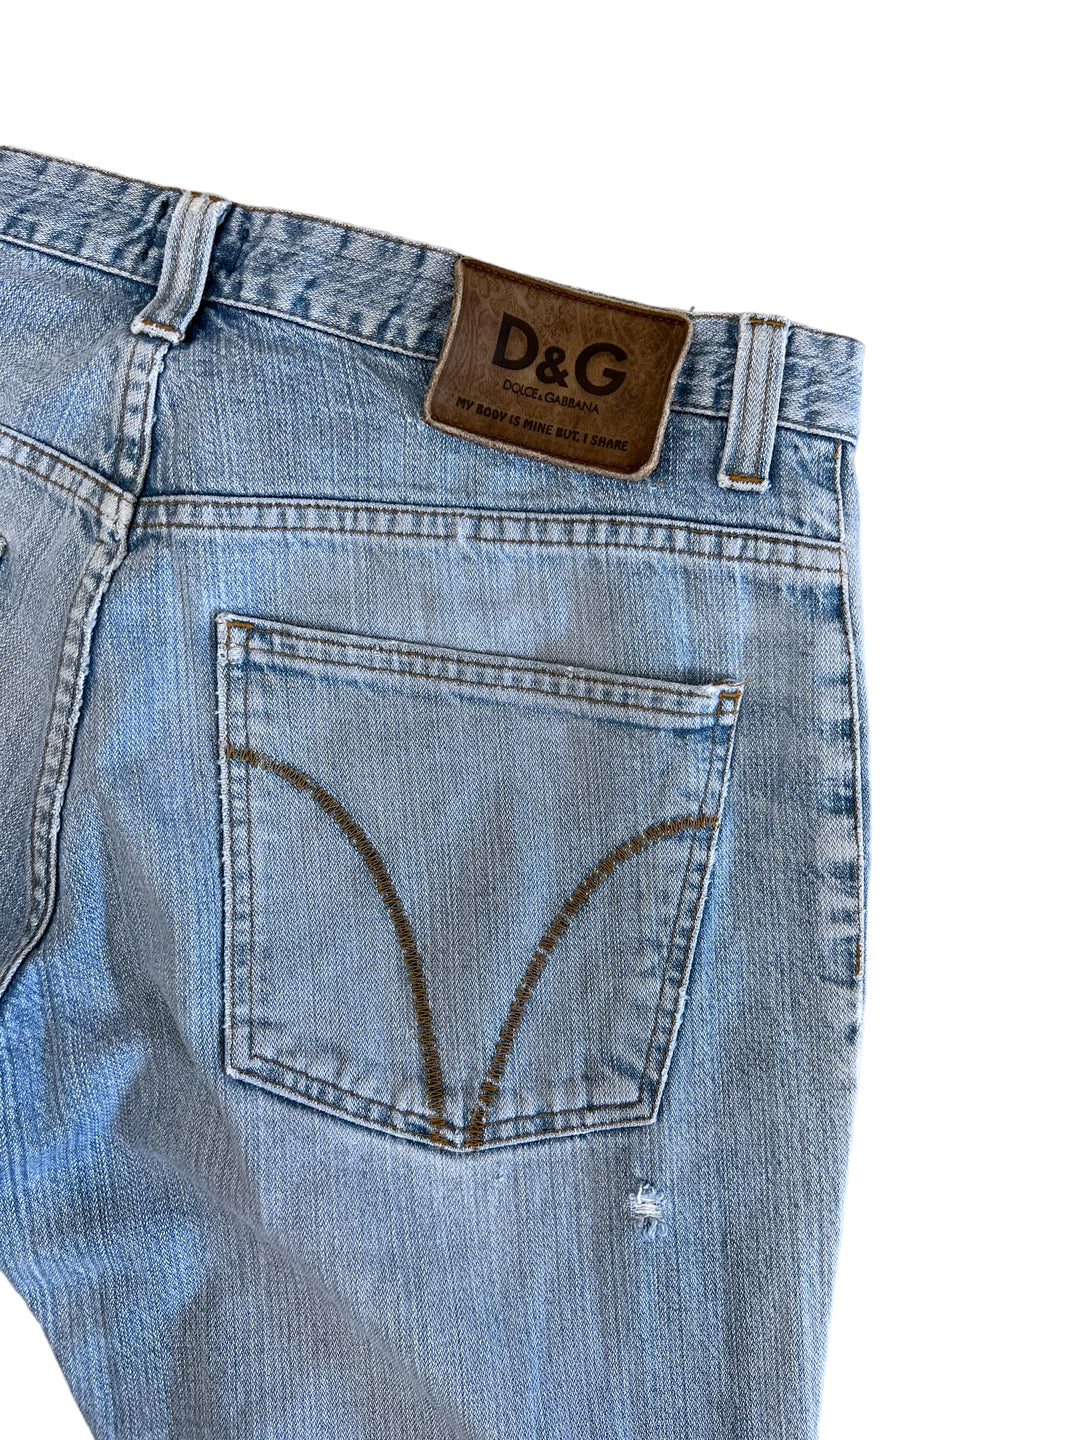 Dolce & Gabbana Low Waist Jeans Women’s Large(40)